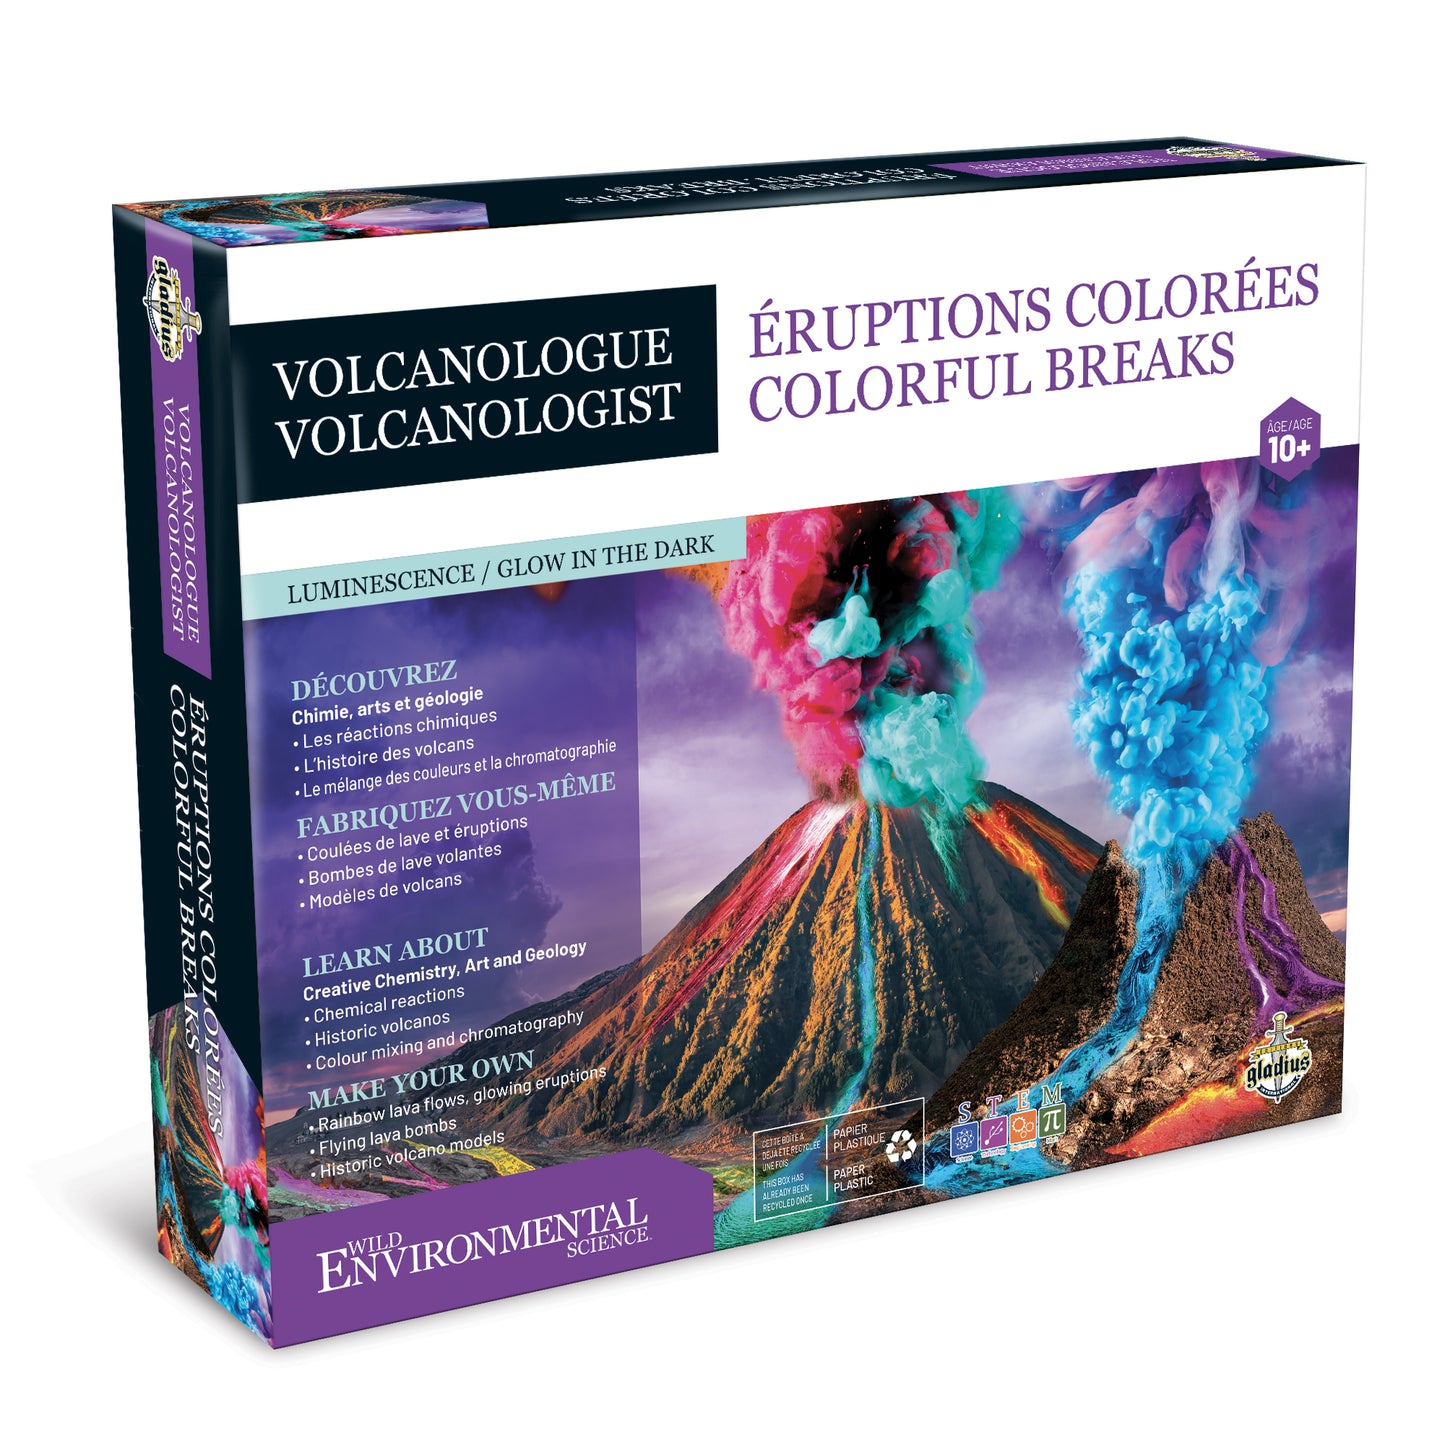 Volcanologist - Colourful Breaks